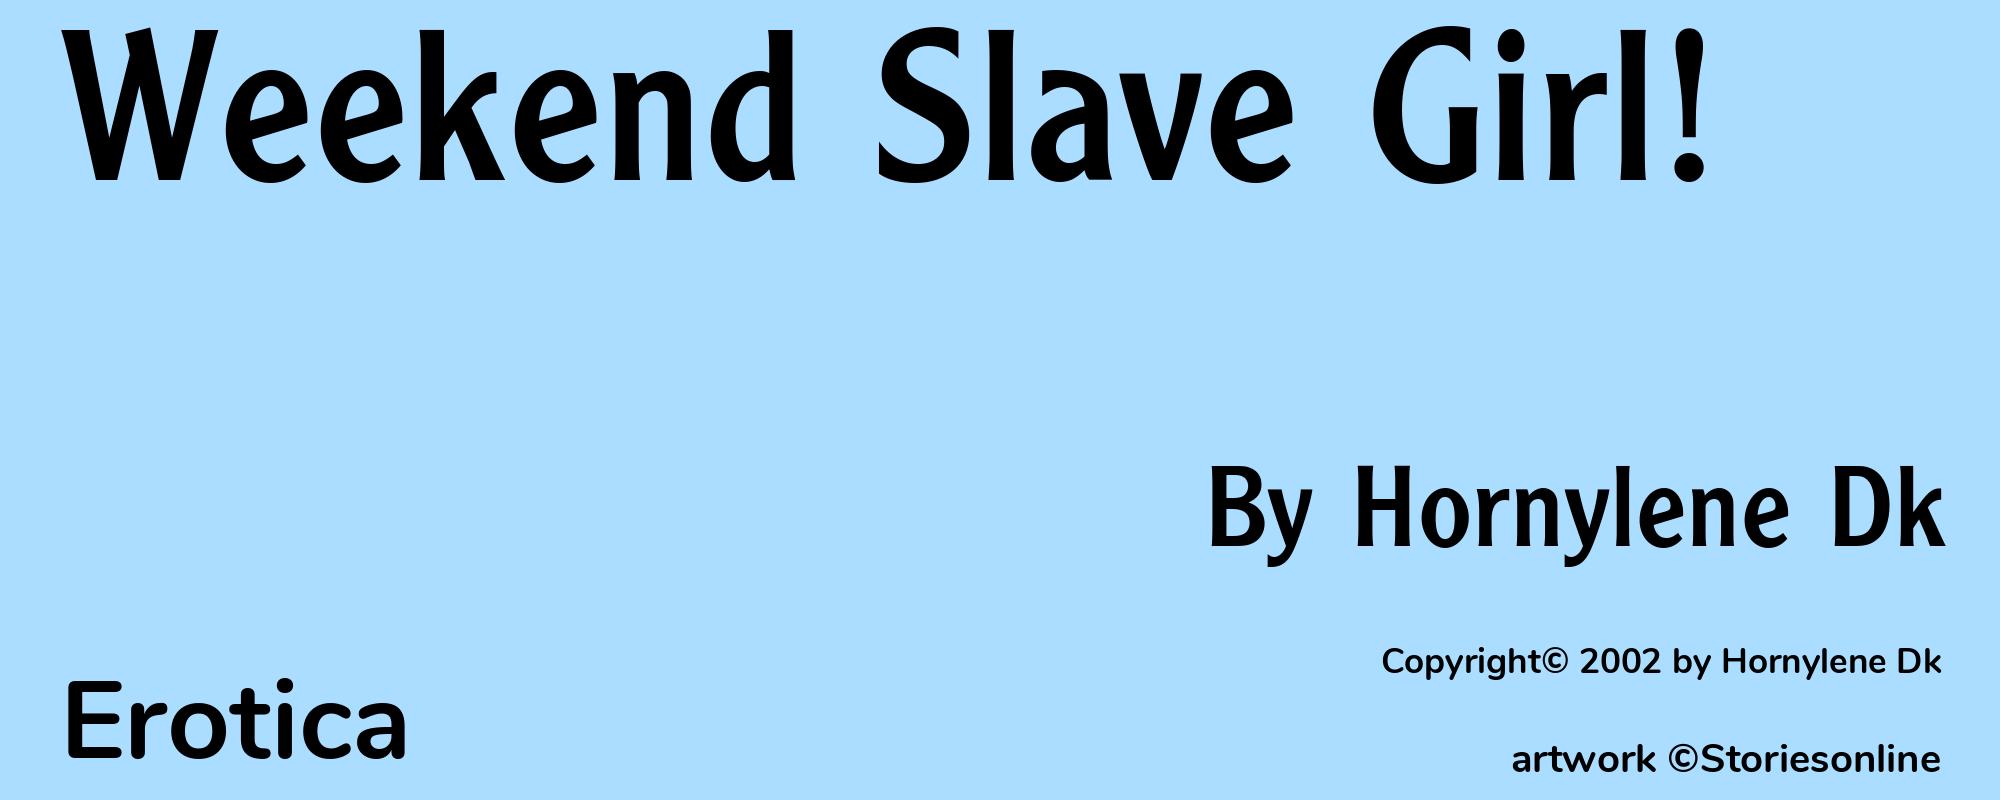 Weekend Slave Girl! - Cover